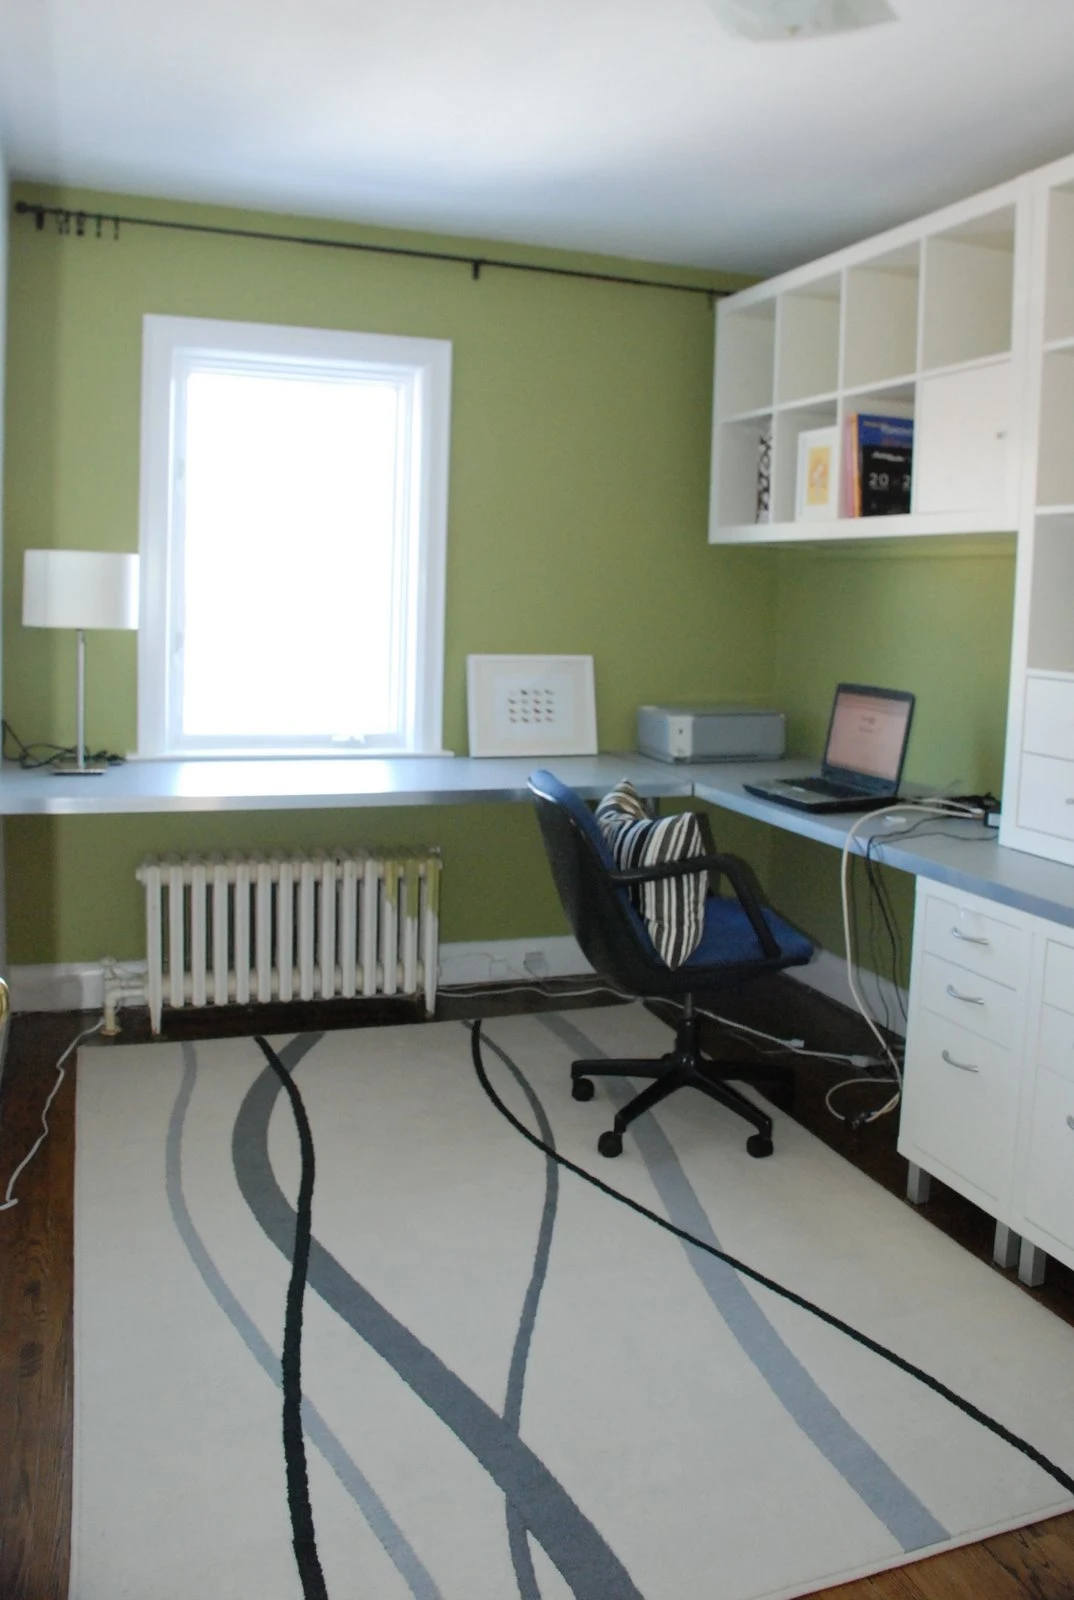 IKEA l shaped desk, ikea home office, office for two, ikea office hack, ikea expedit on walls